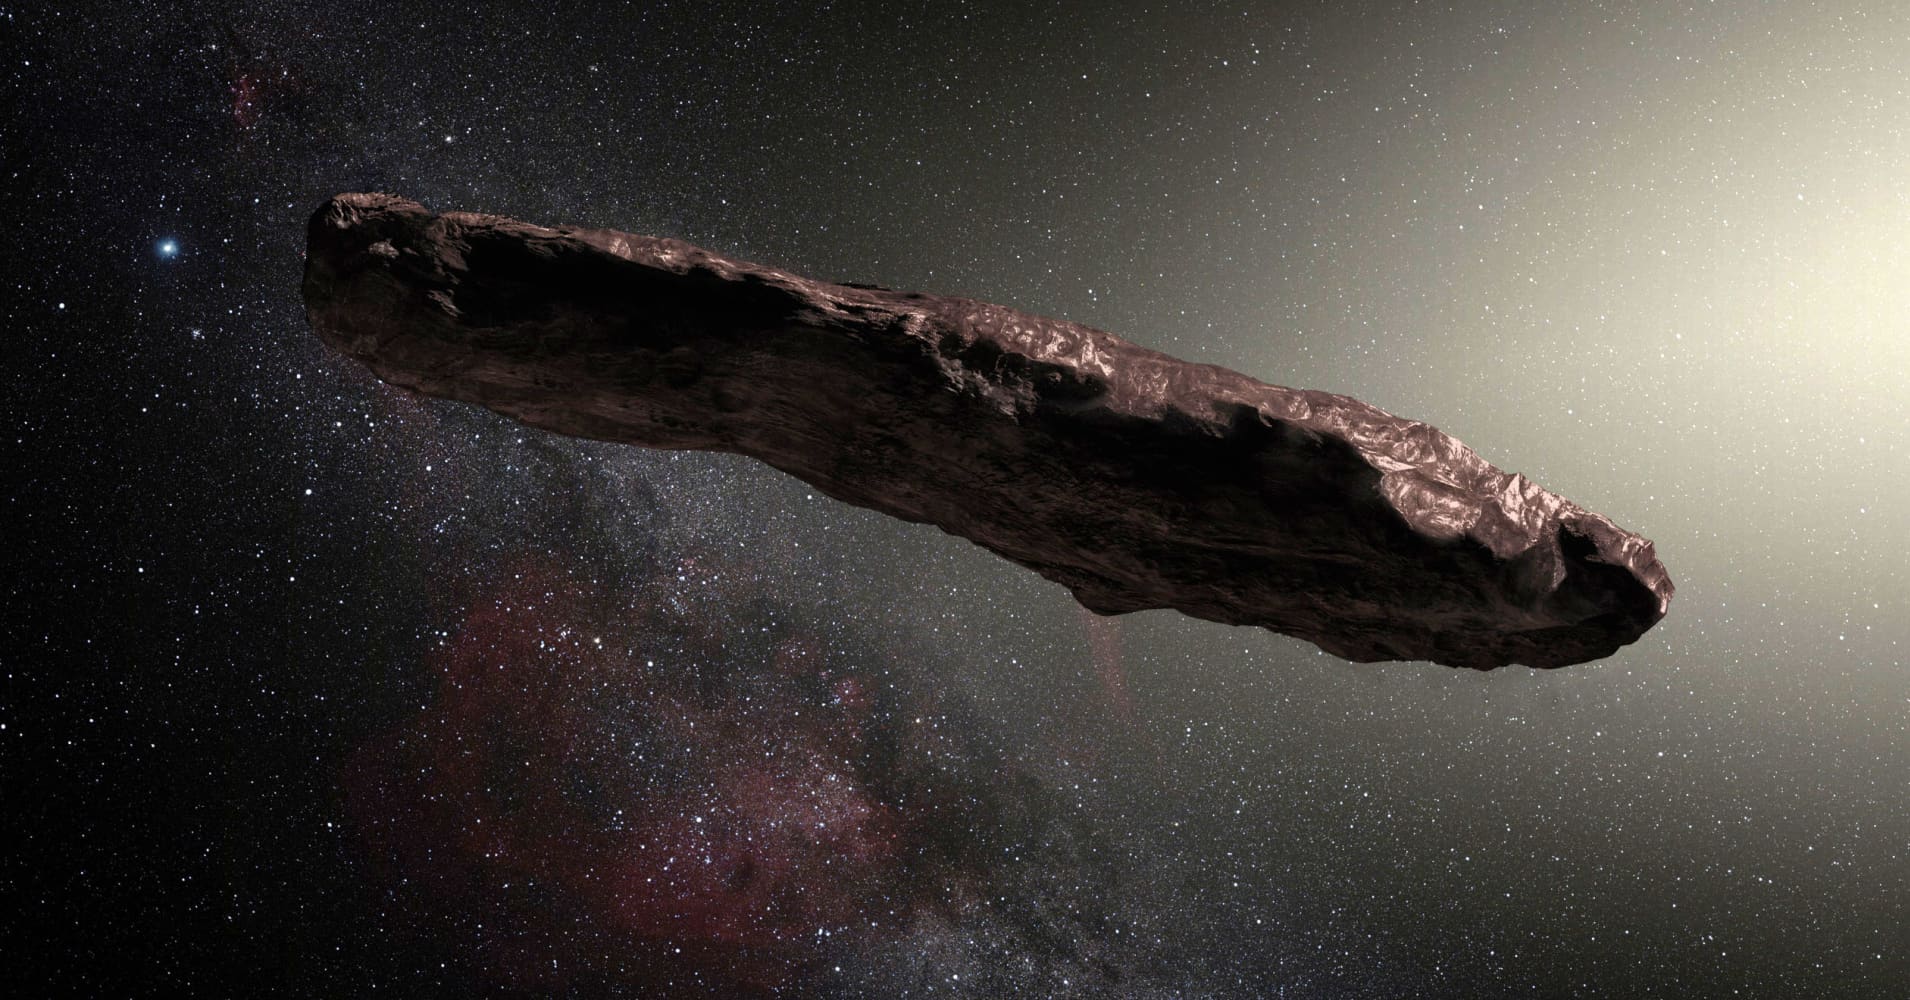 Oumuamua - artist's depiction of the long rigid object